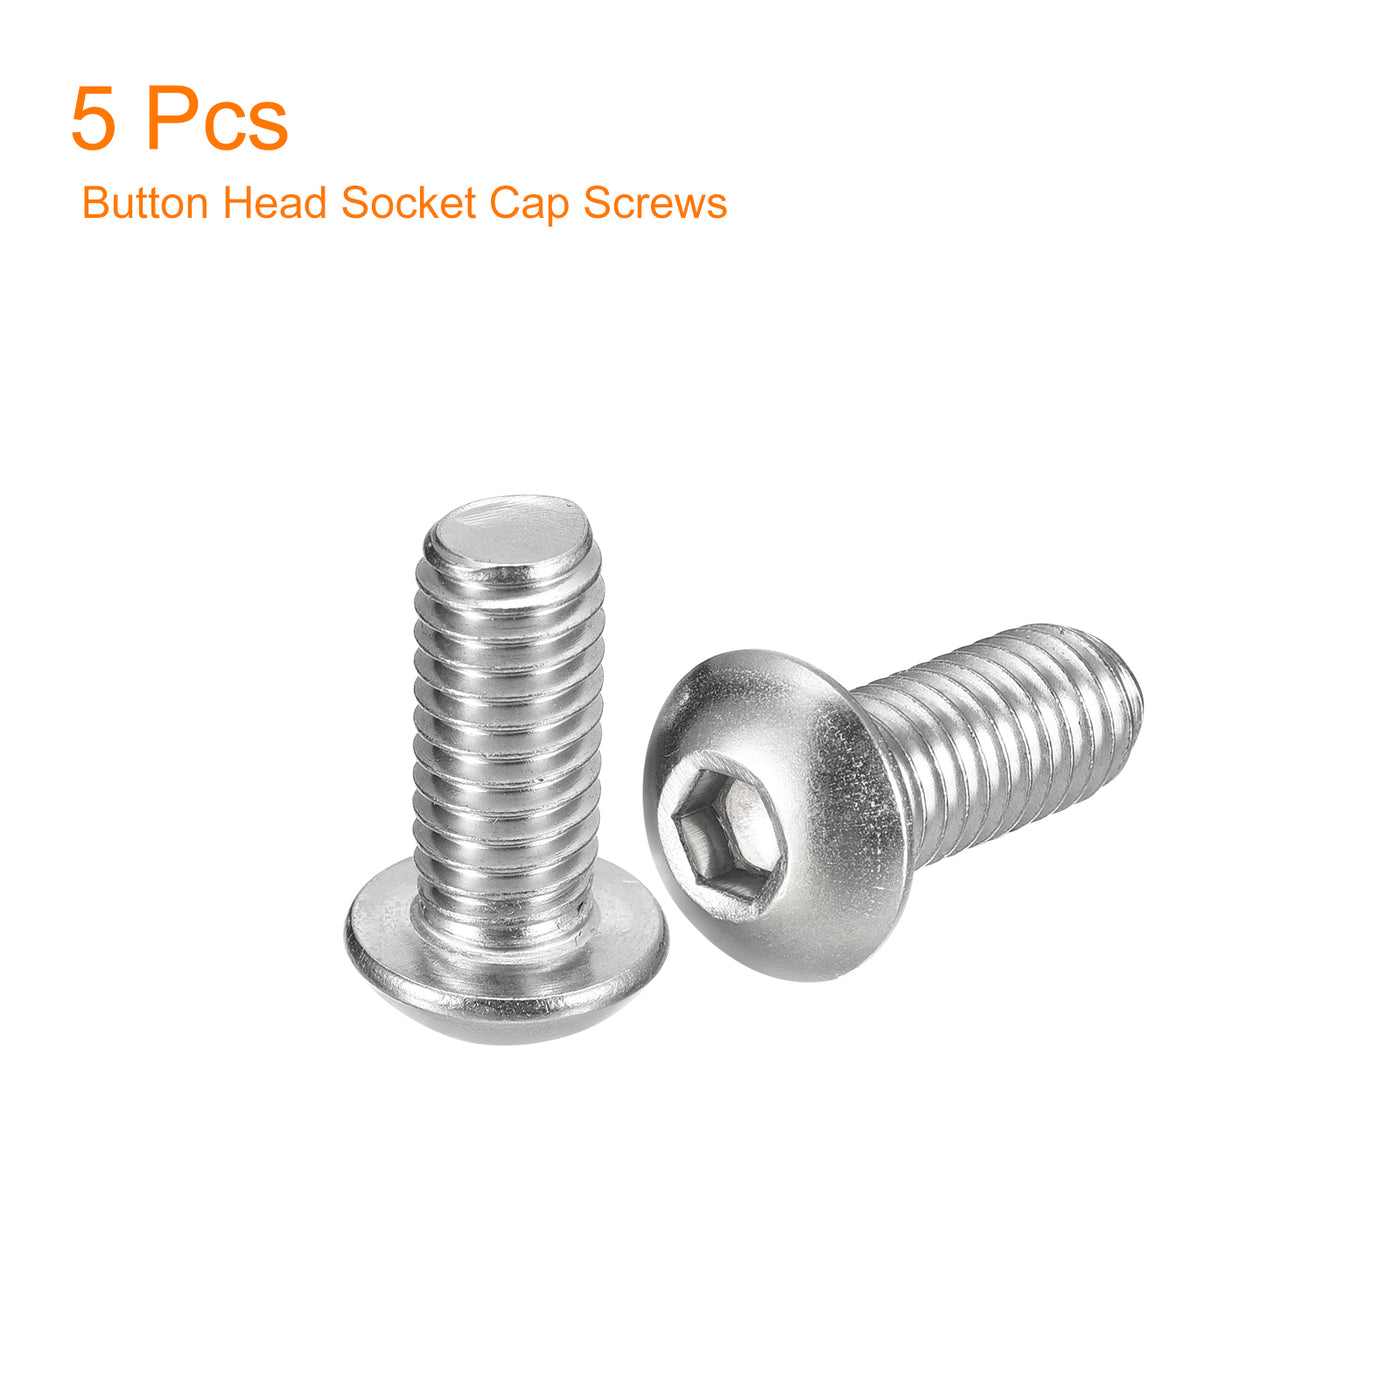 uxcell Uxcell 3/8-16x7/8" Button Head Socket Cap Screws, 5pcs 304 Stainless Steel Screws